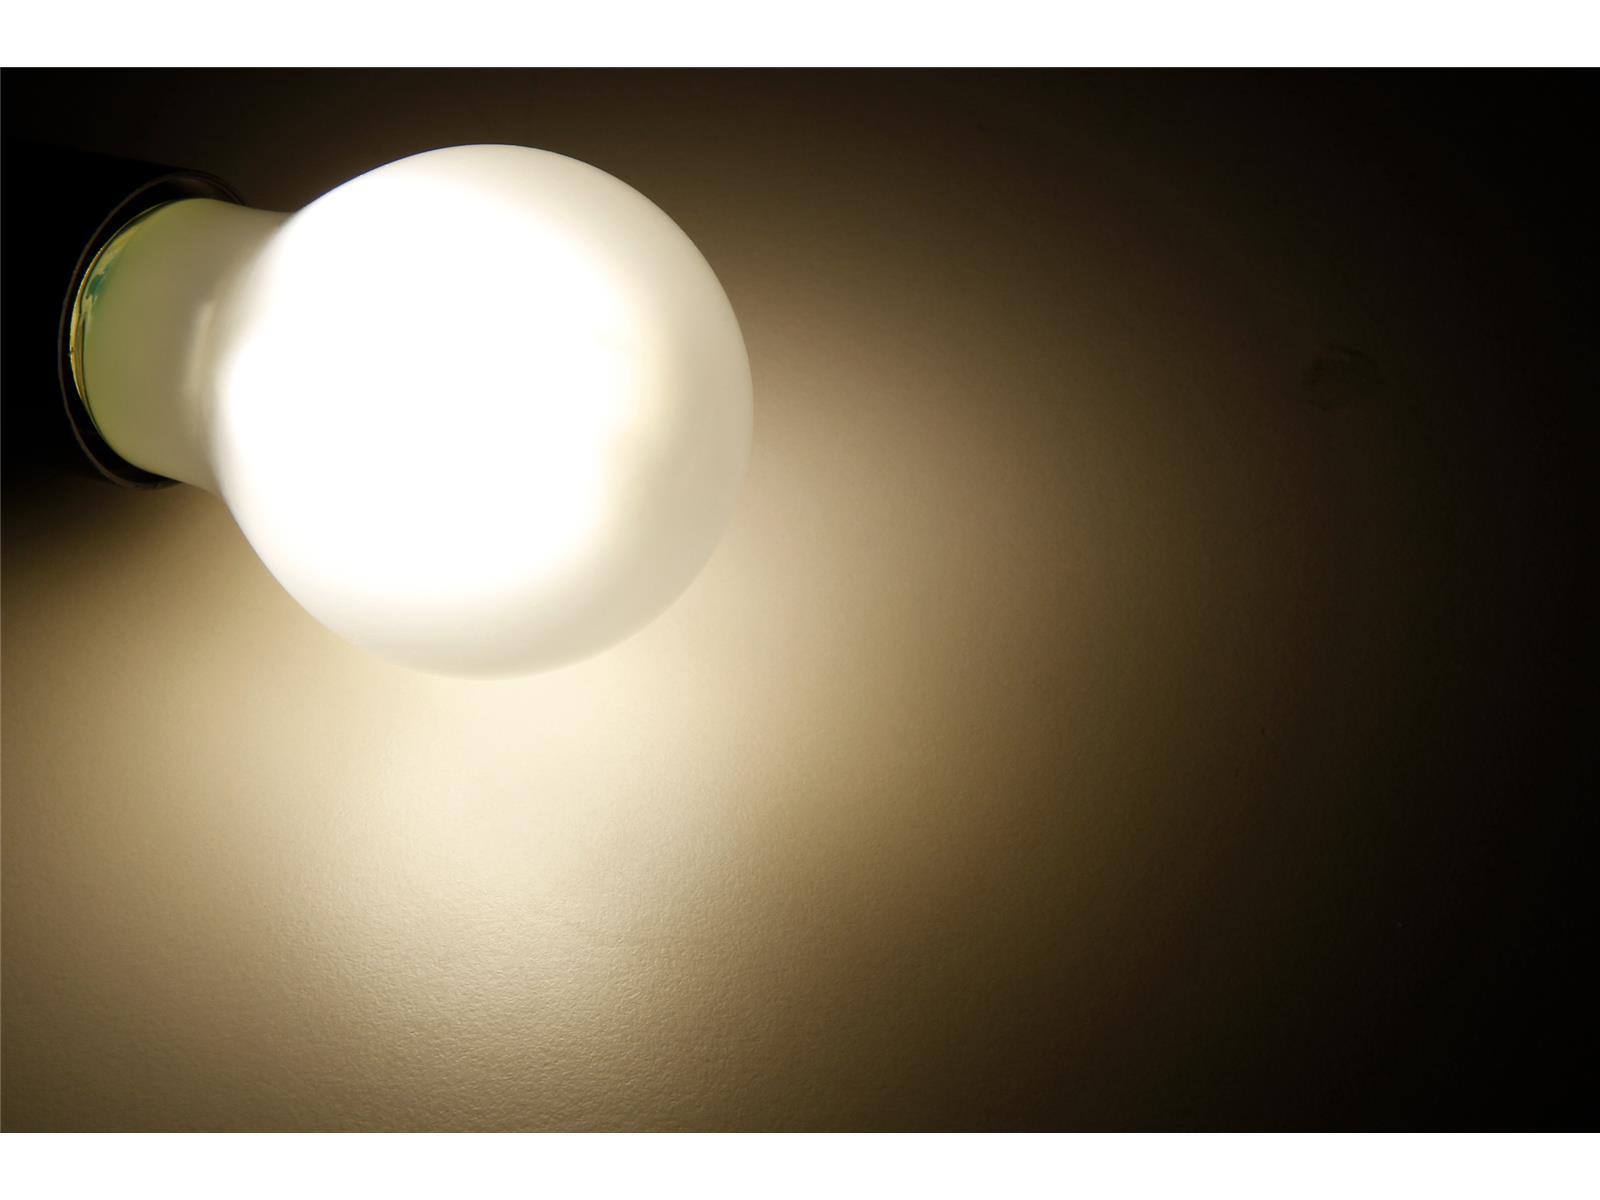 LED Filament Glühlampe McShine ''Filed'', E27, 4W, 490 lm, warmweiß, matt